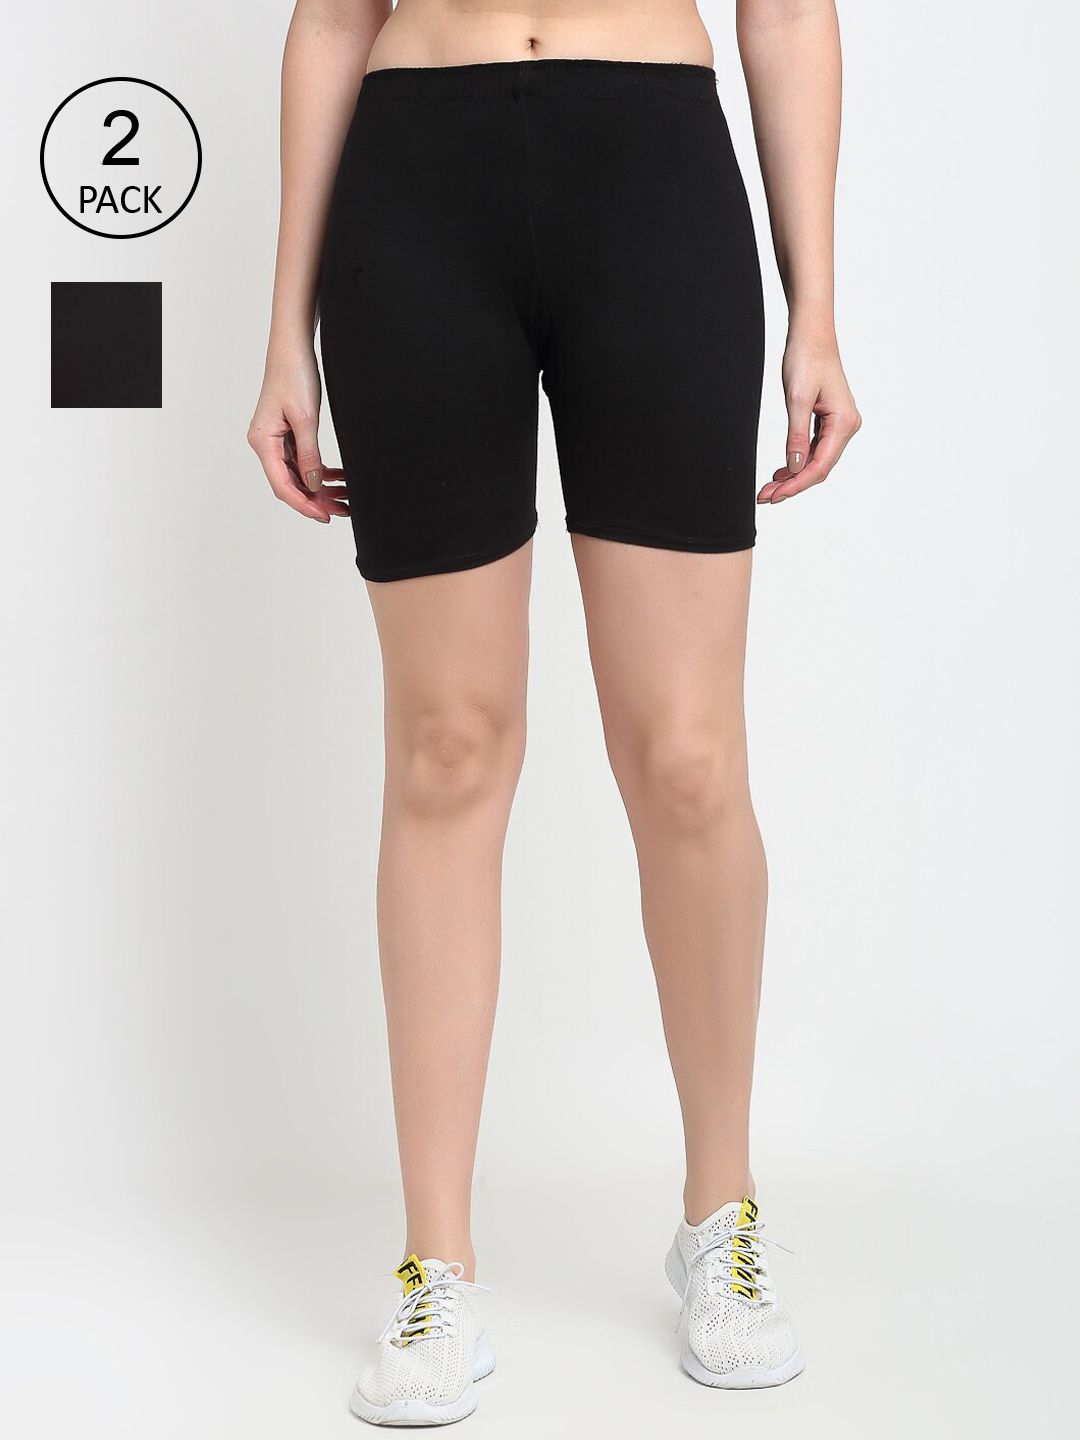 GRACIT Women Pack of 2 Black Skinny Fit Biker Shorts Price in India